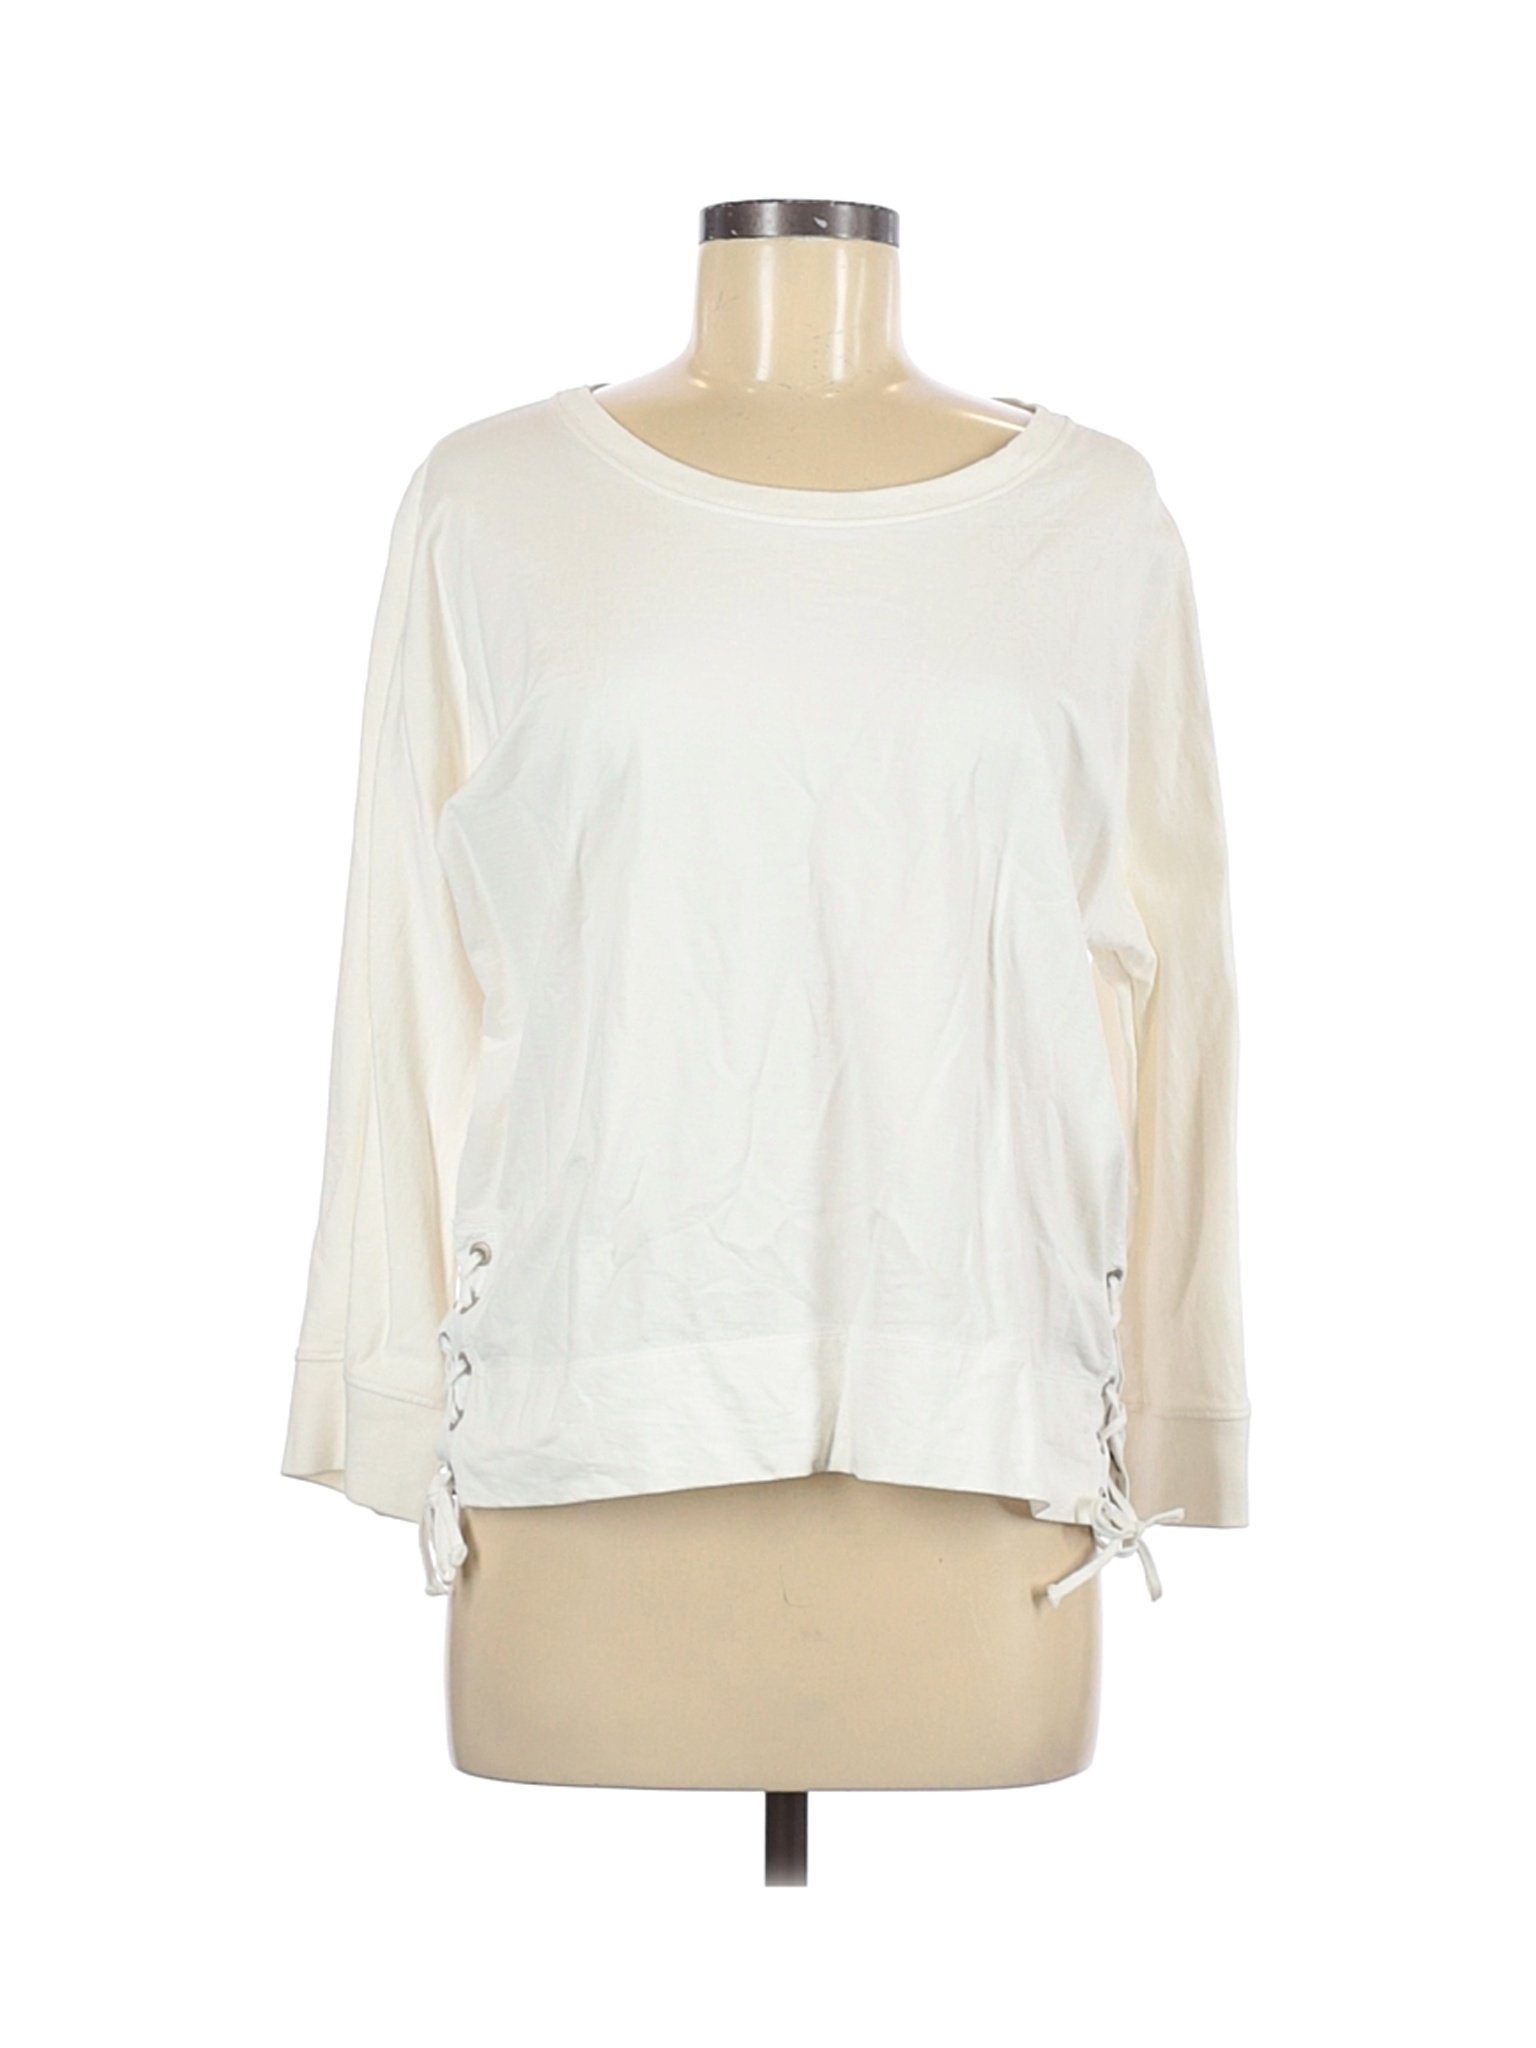 J.Crew Women White Long Sleeve T-Shirt M | eBay